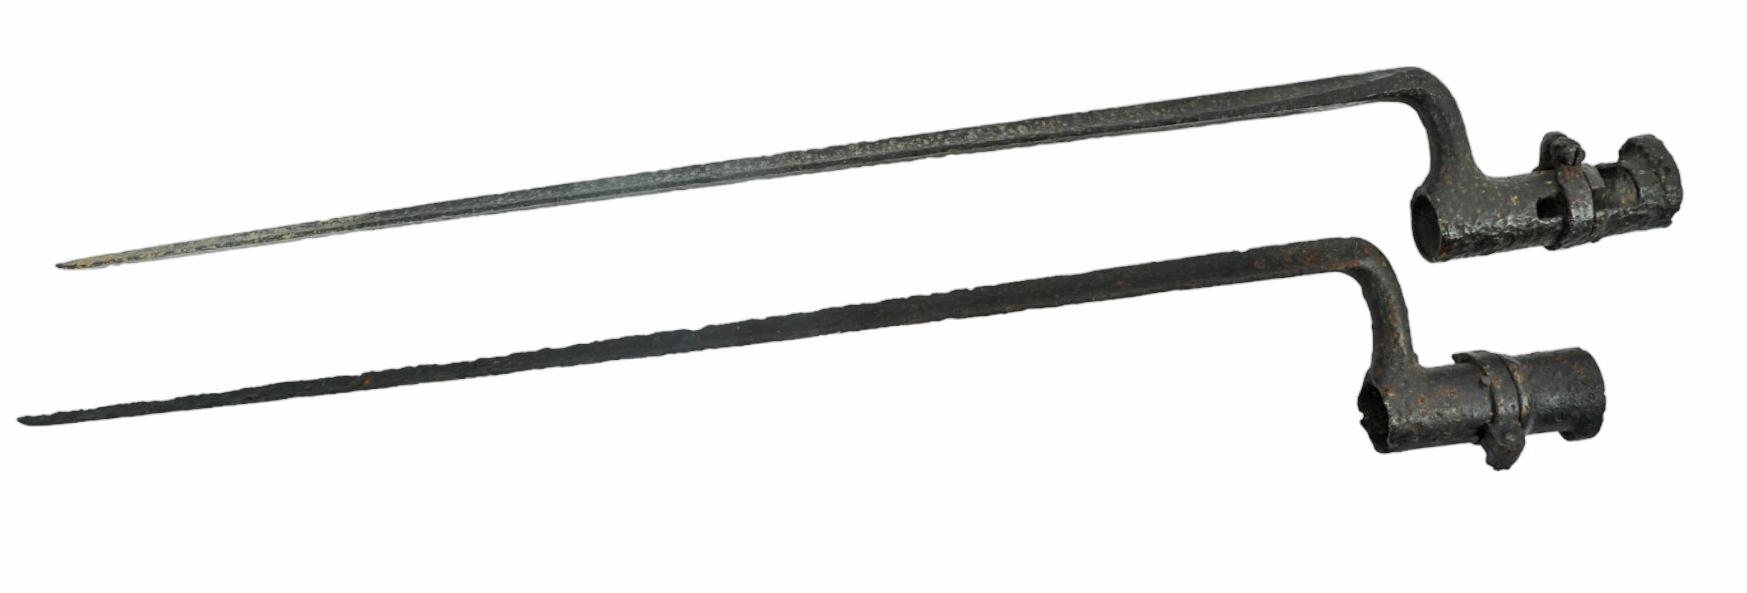 Two Civil War era Excavated Rifle Socket Bayonets (A)